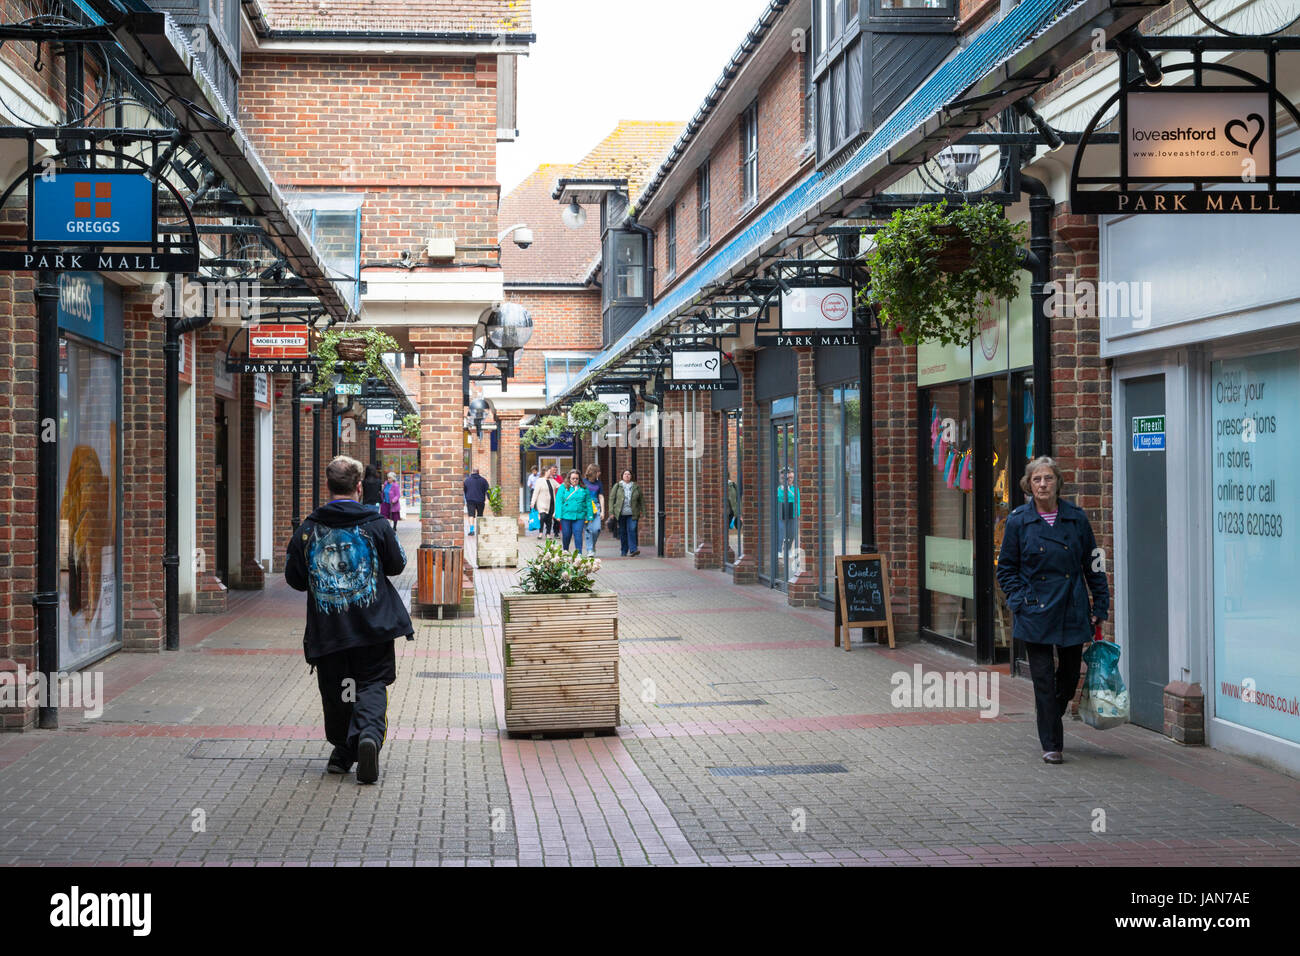 Ashford high street, town centre, people walking in the park mall shopping centre, Ashford, Kent, uk Stock Photo